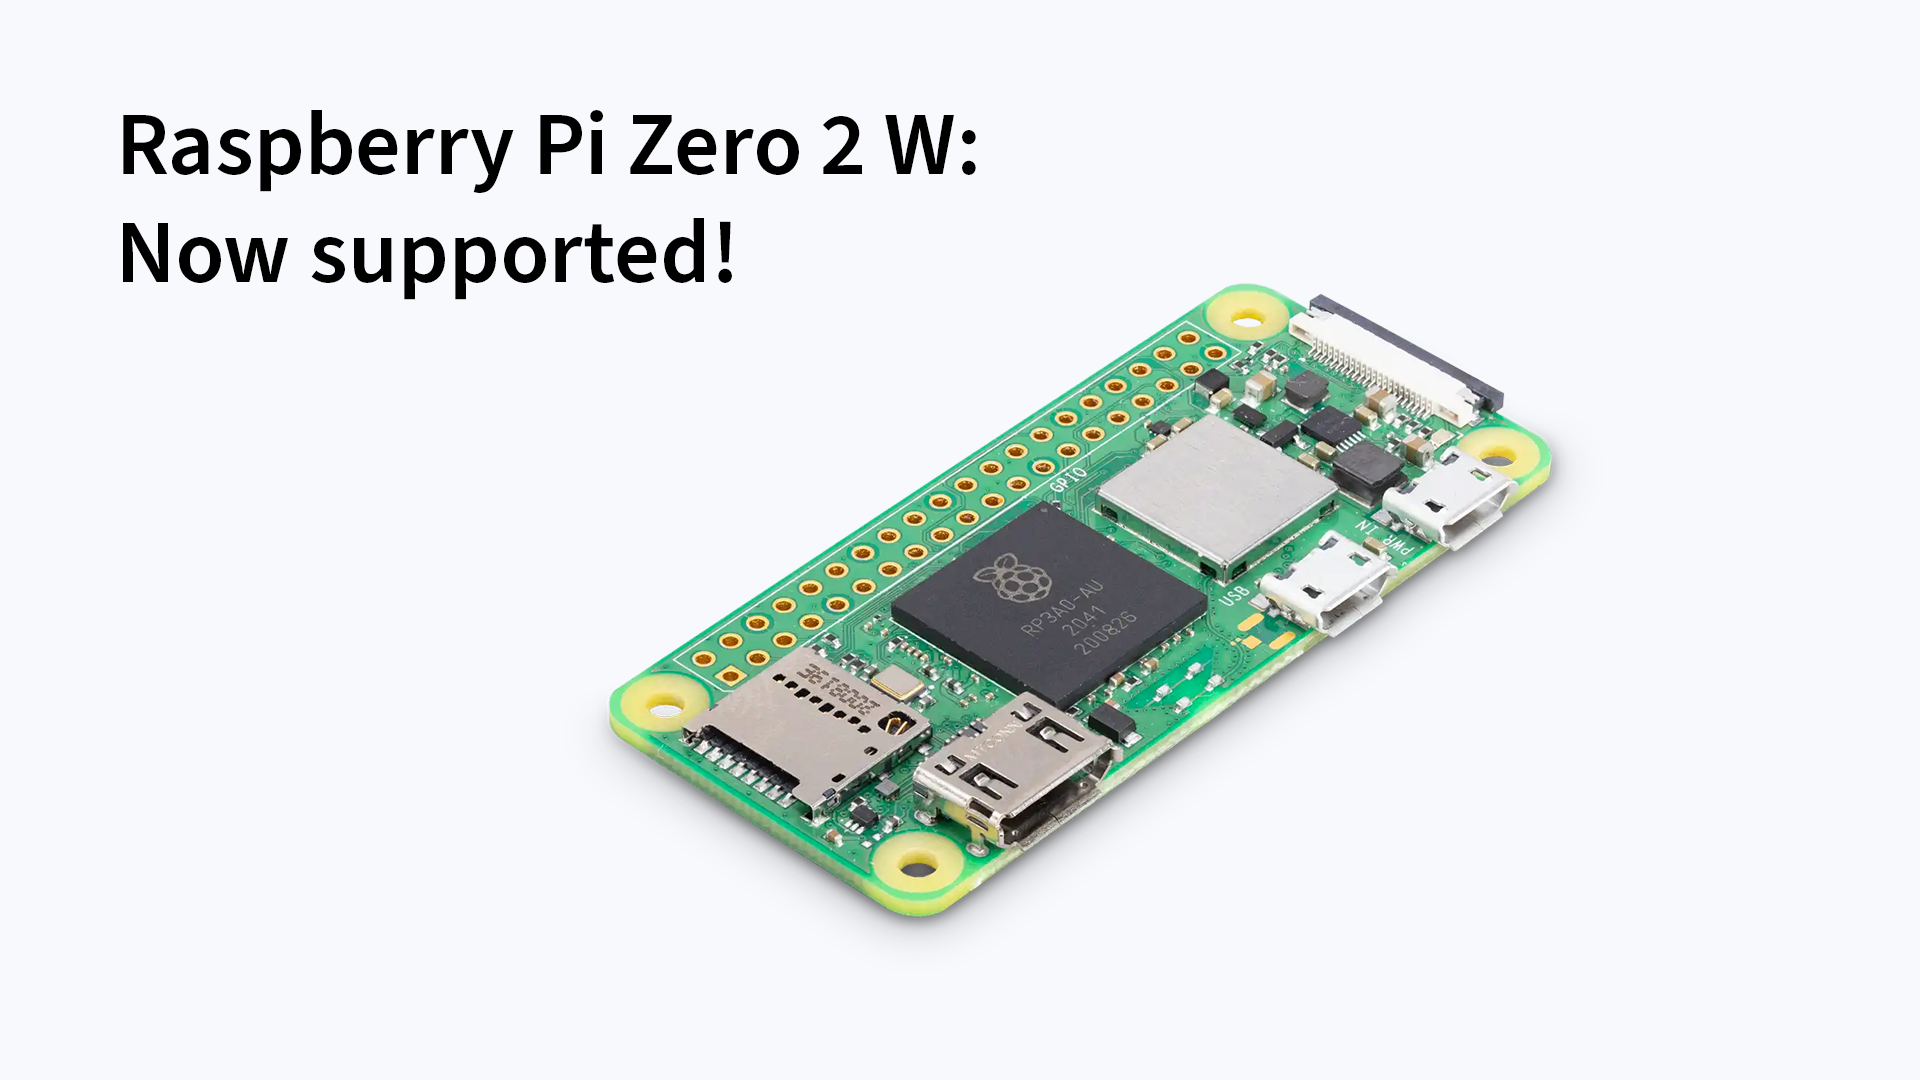 balenaCloud supports the Raspberry Pi Zero 2 W